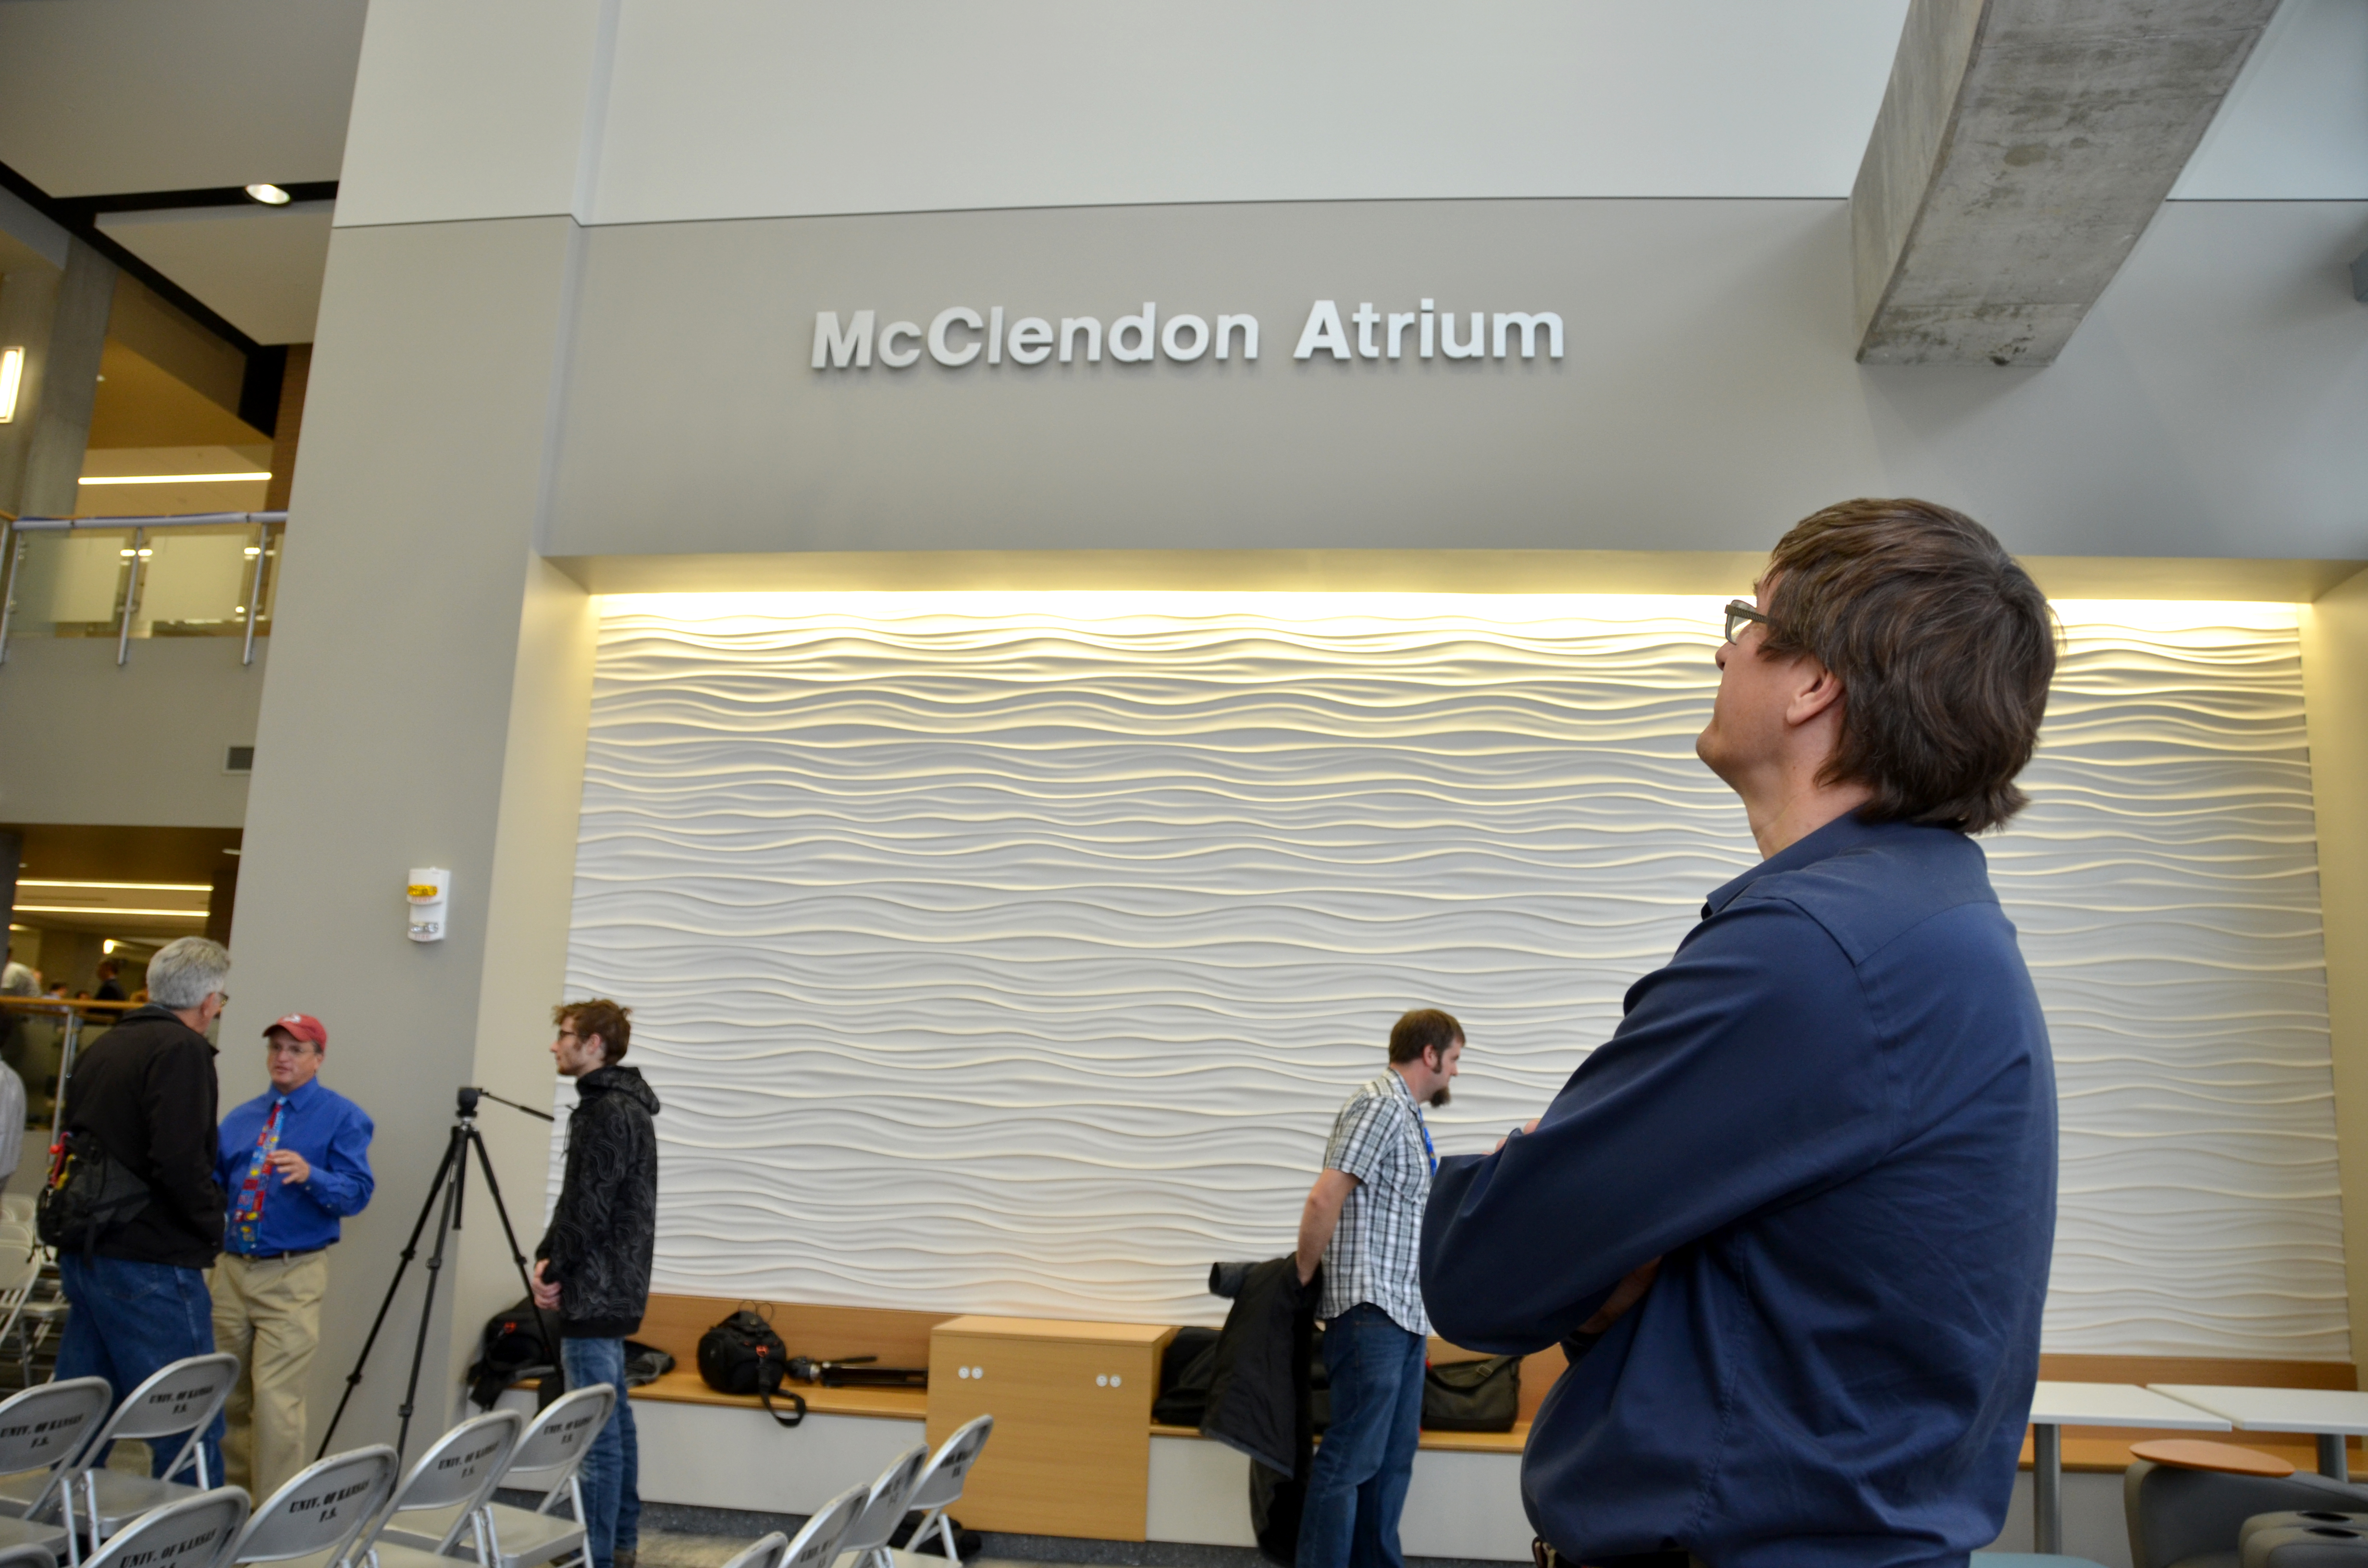 Brian McClendon in the atrium bearing his name